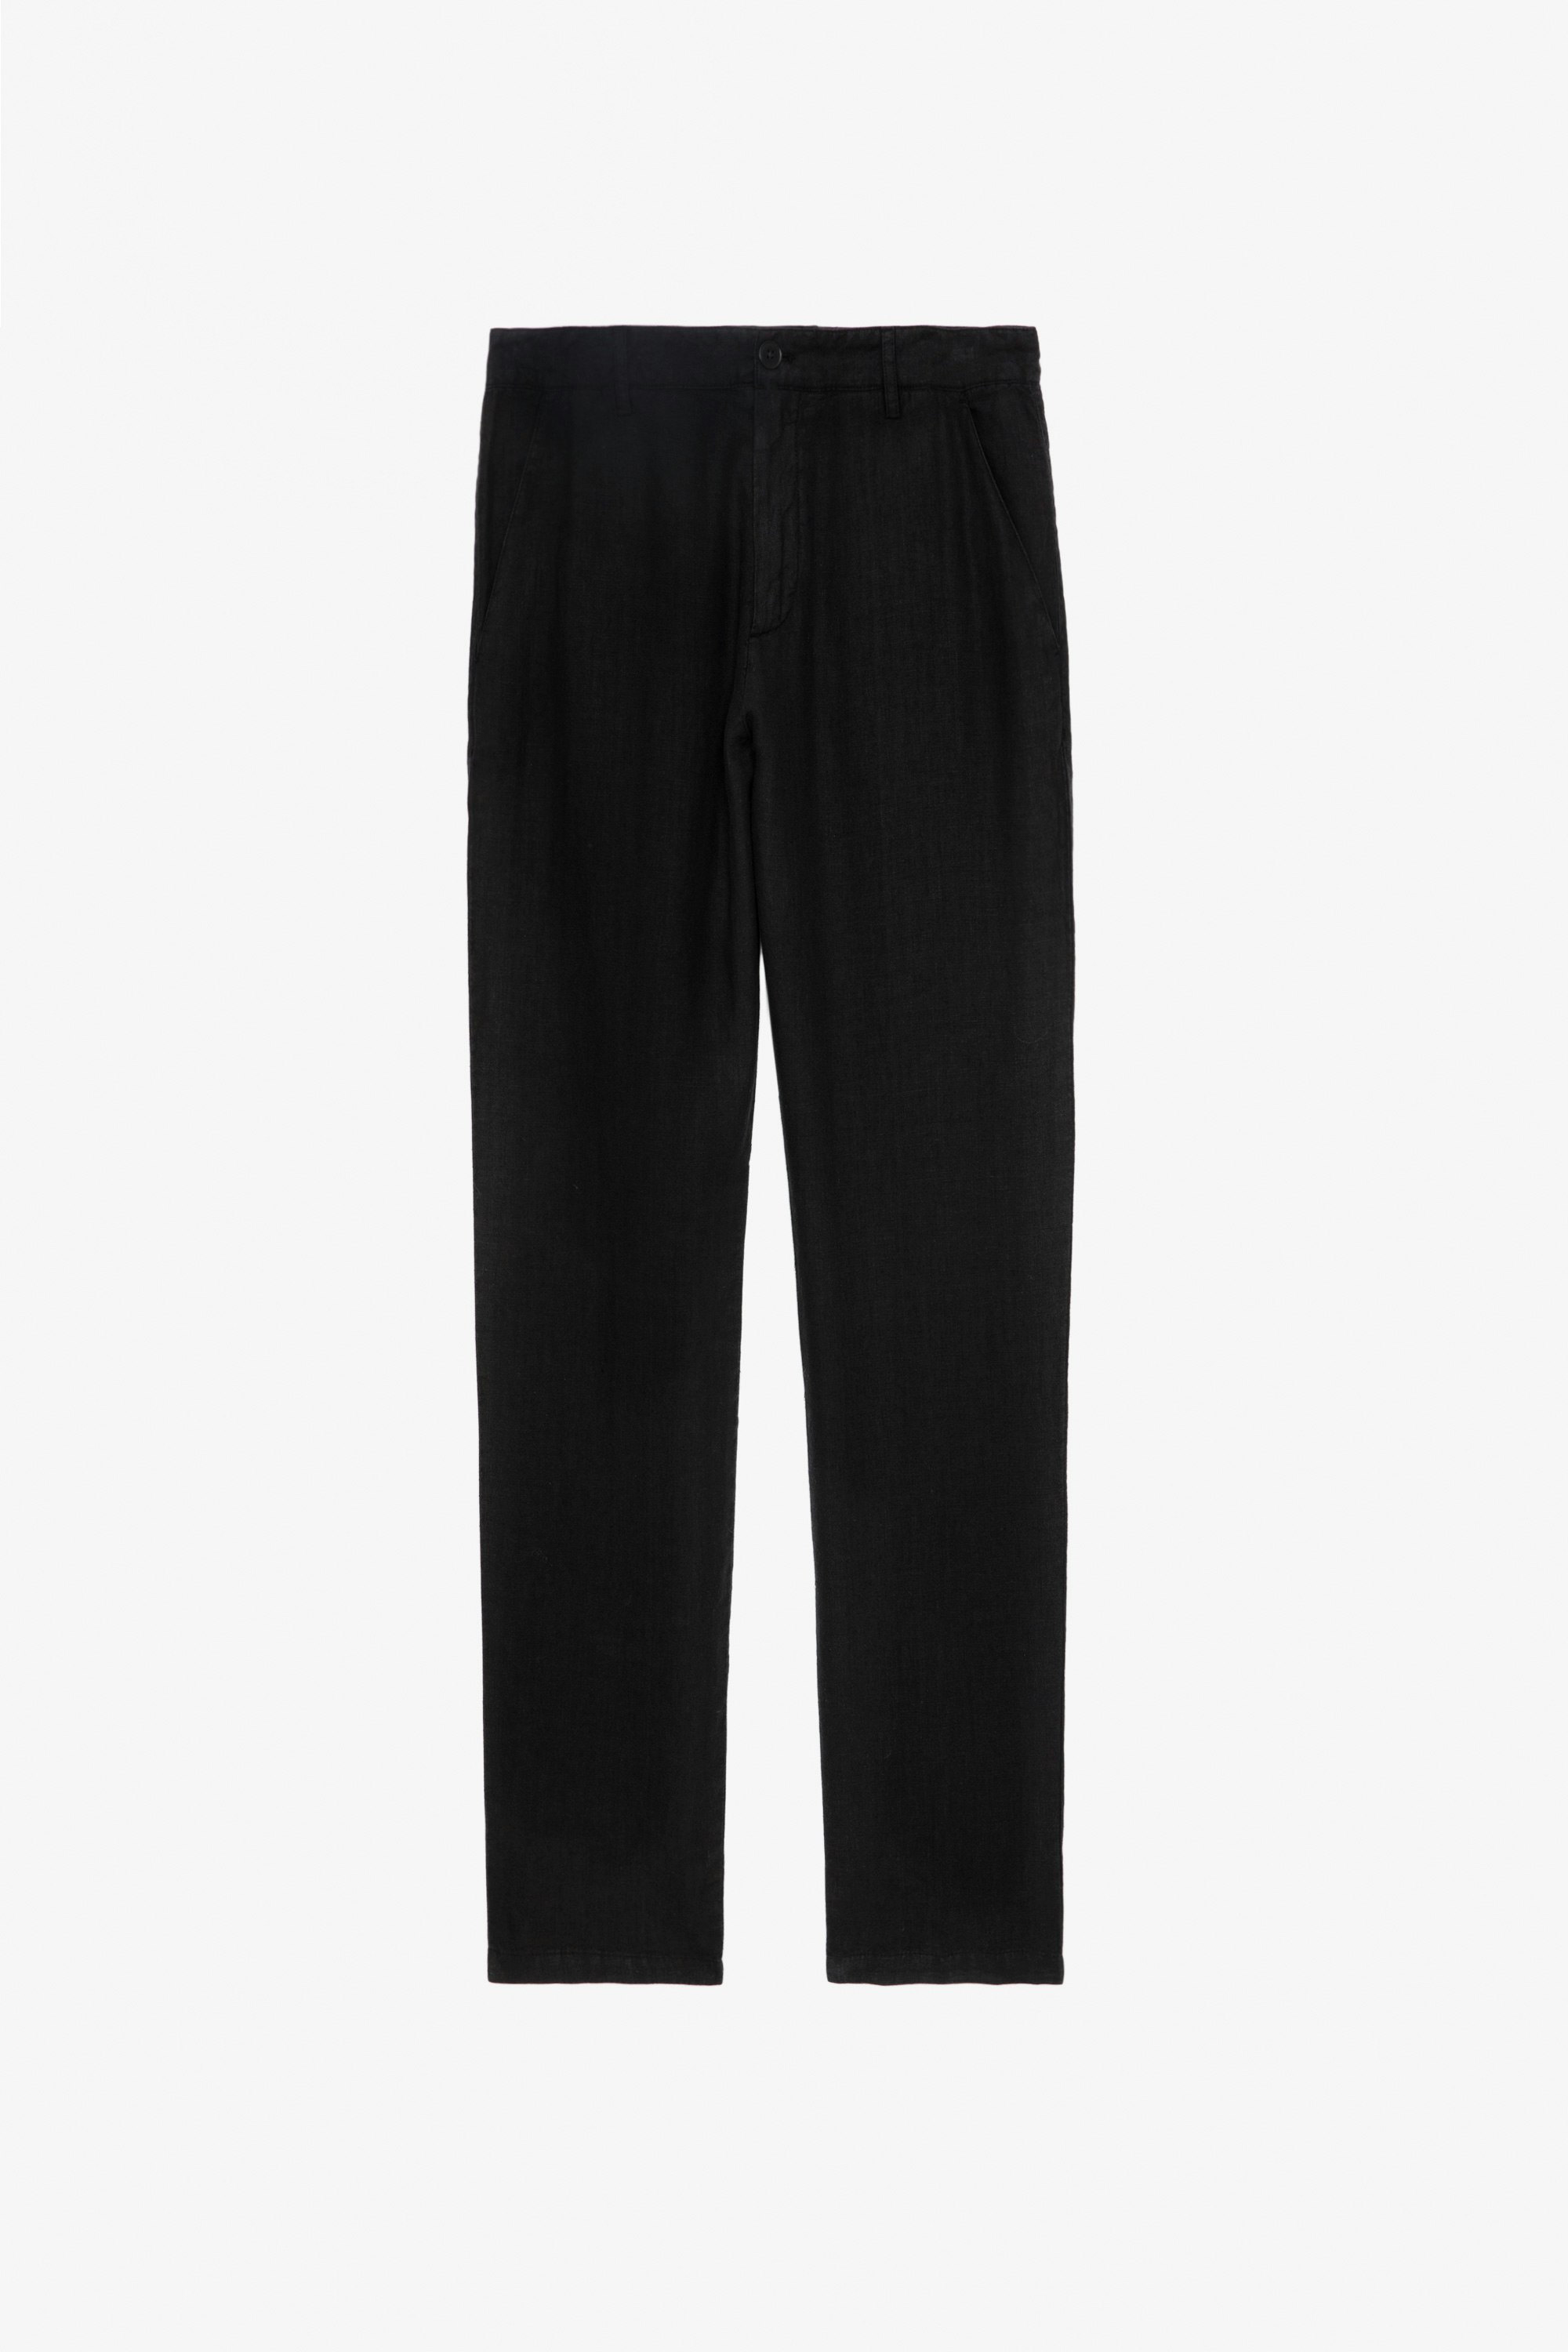 Pantalon Pierce Lin - Pantalon en lin lavé noir à poches.